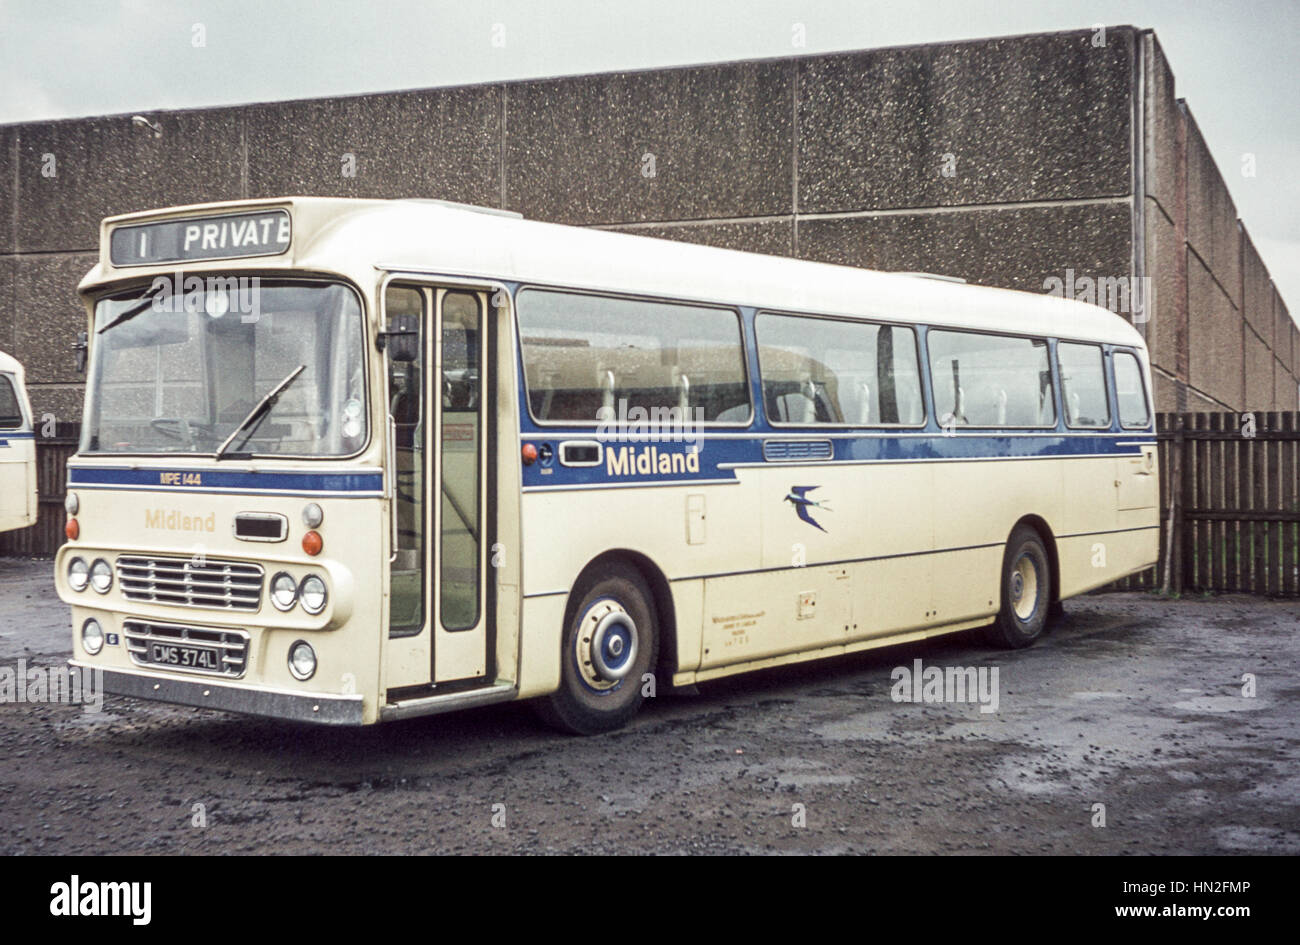 Edimburgo, Reino Unido - 1973: Vintage imagen de autobús en Edimburgo. Alexander Midland Leyland MPE 144 (registro CMS 374L). Foto de stock